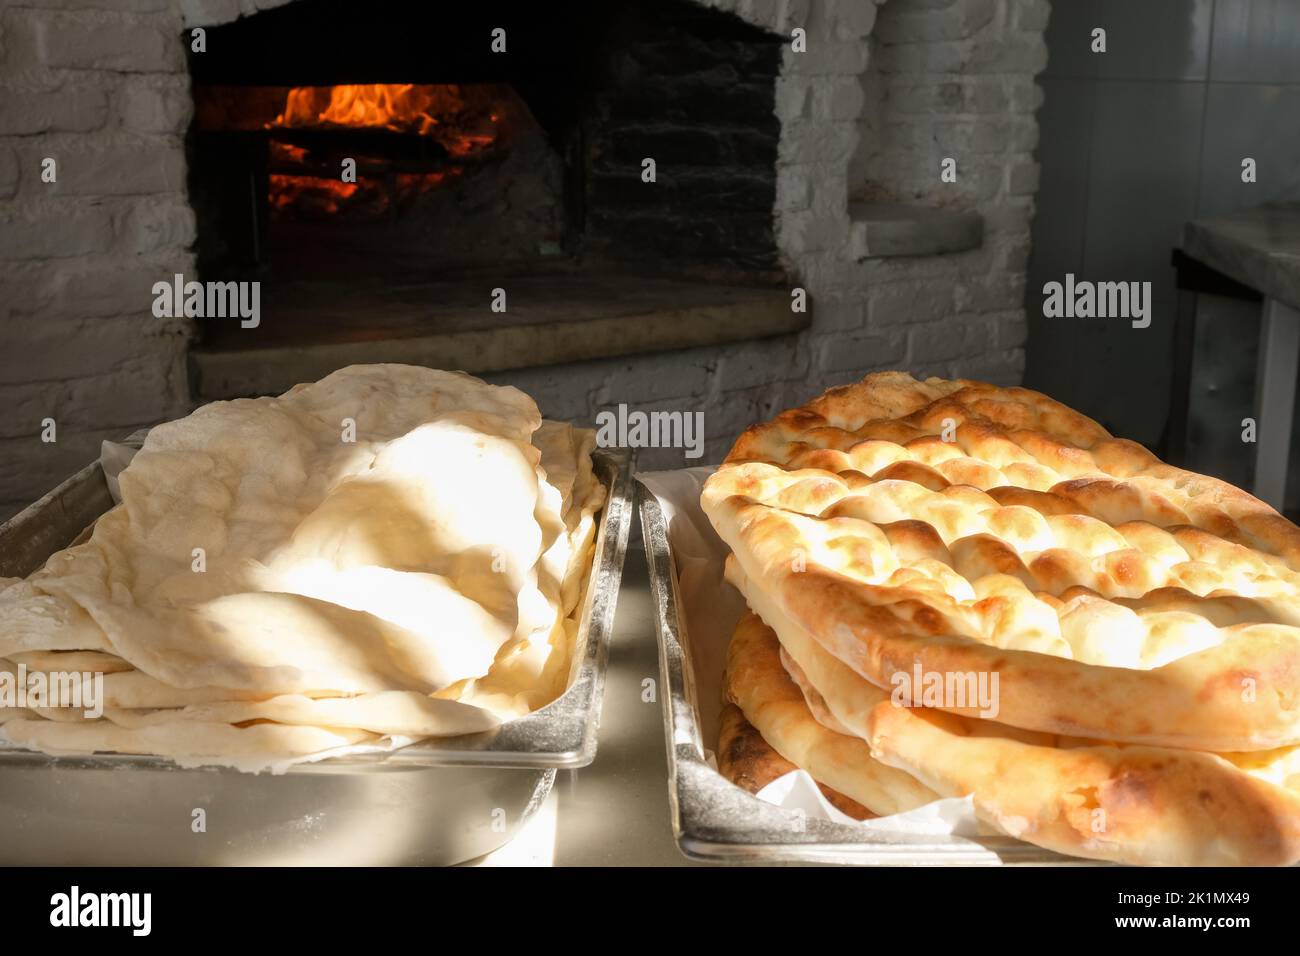 Traditional bread in a Turkish bakery during the Ramadan period - Ramazan pidesi, in a stone oven. Stock Photo